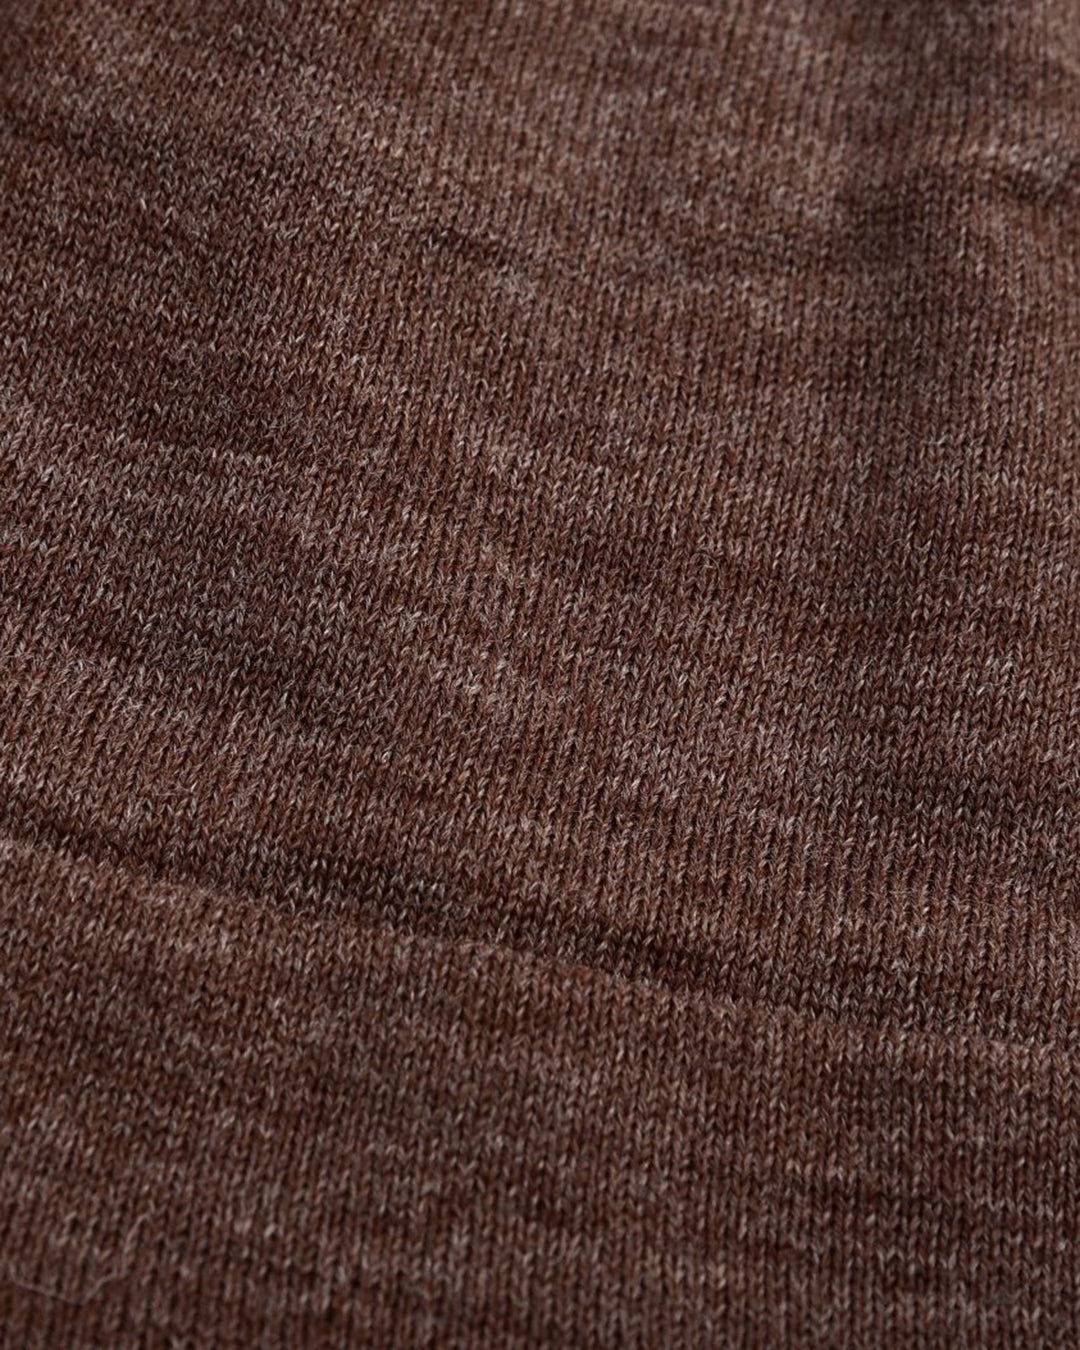 Pecan Brown/Ecru Wool Cap